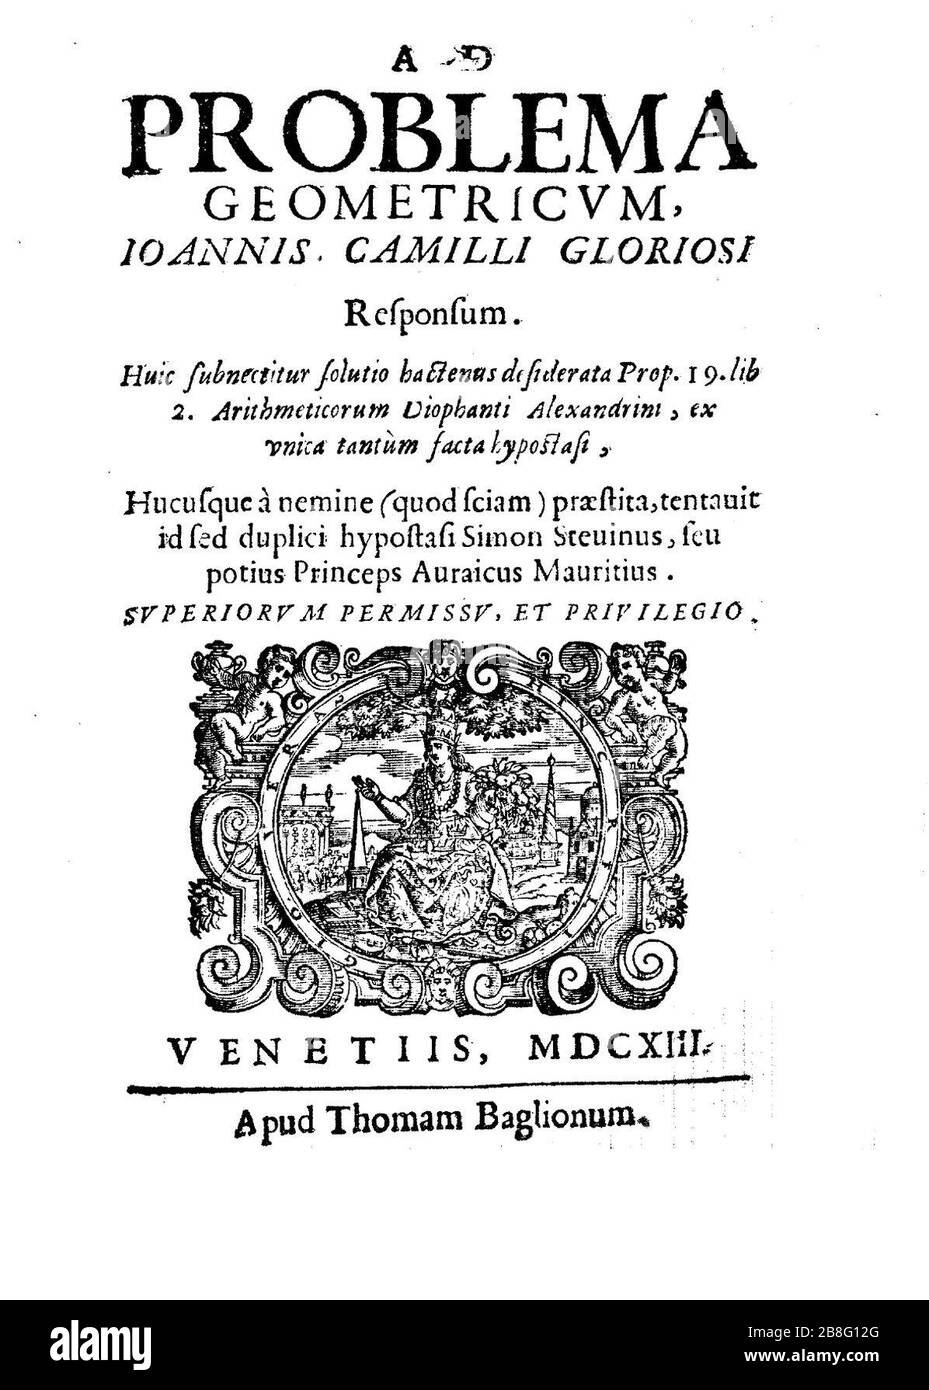 Glorioso, Giovanni Camillo – Ad problema geometricum responsum, 1613 – BEIC 211739. Stock Photo